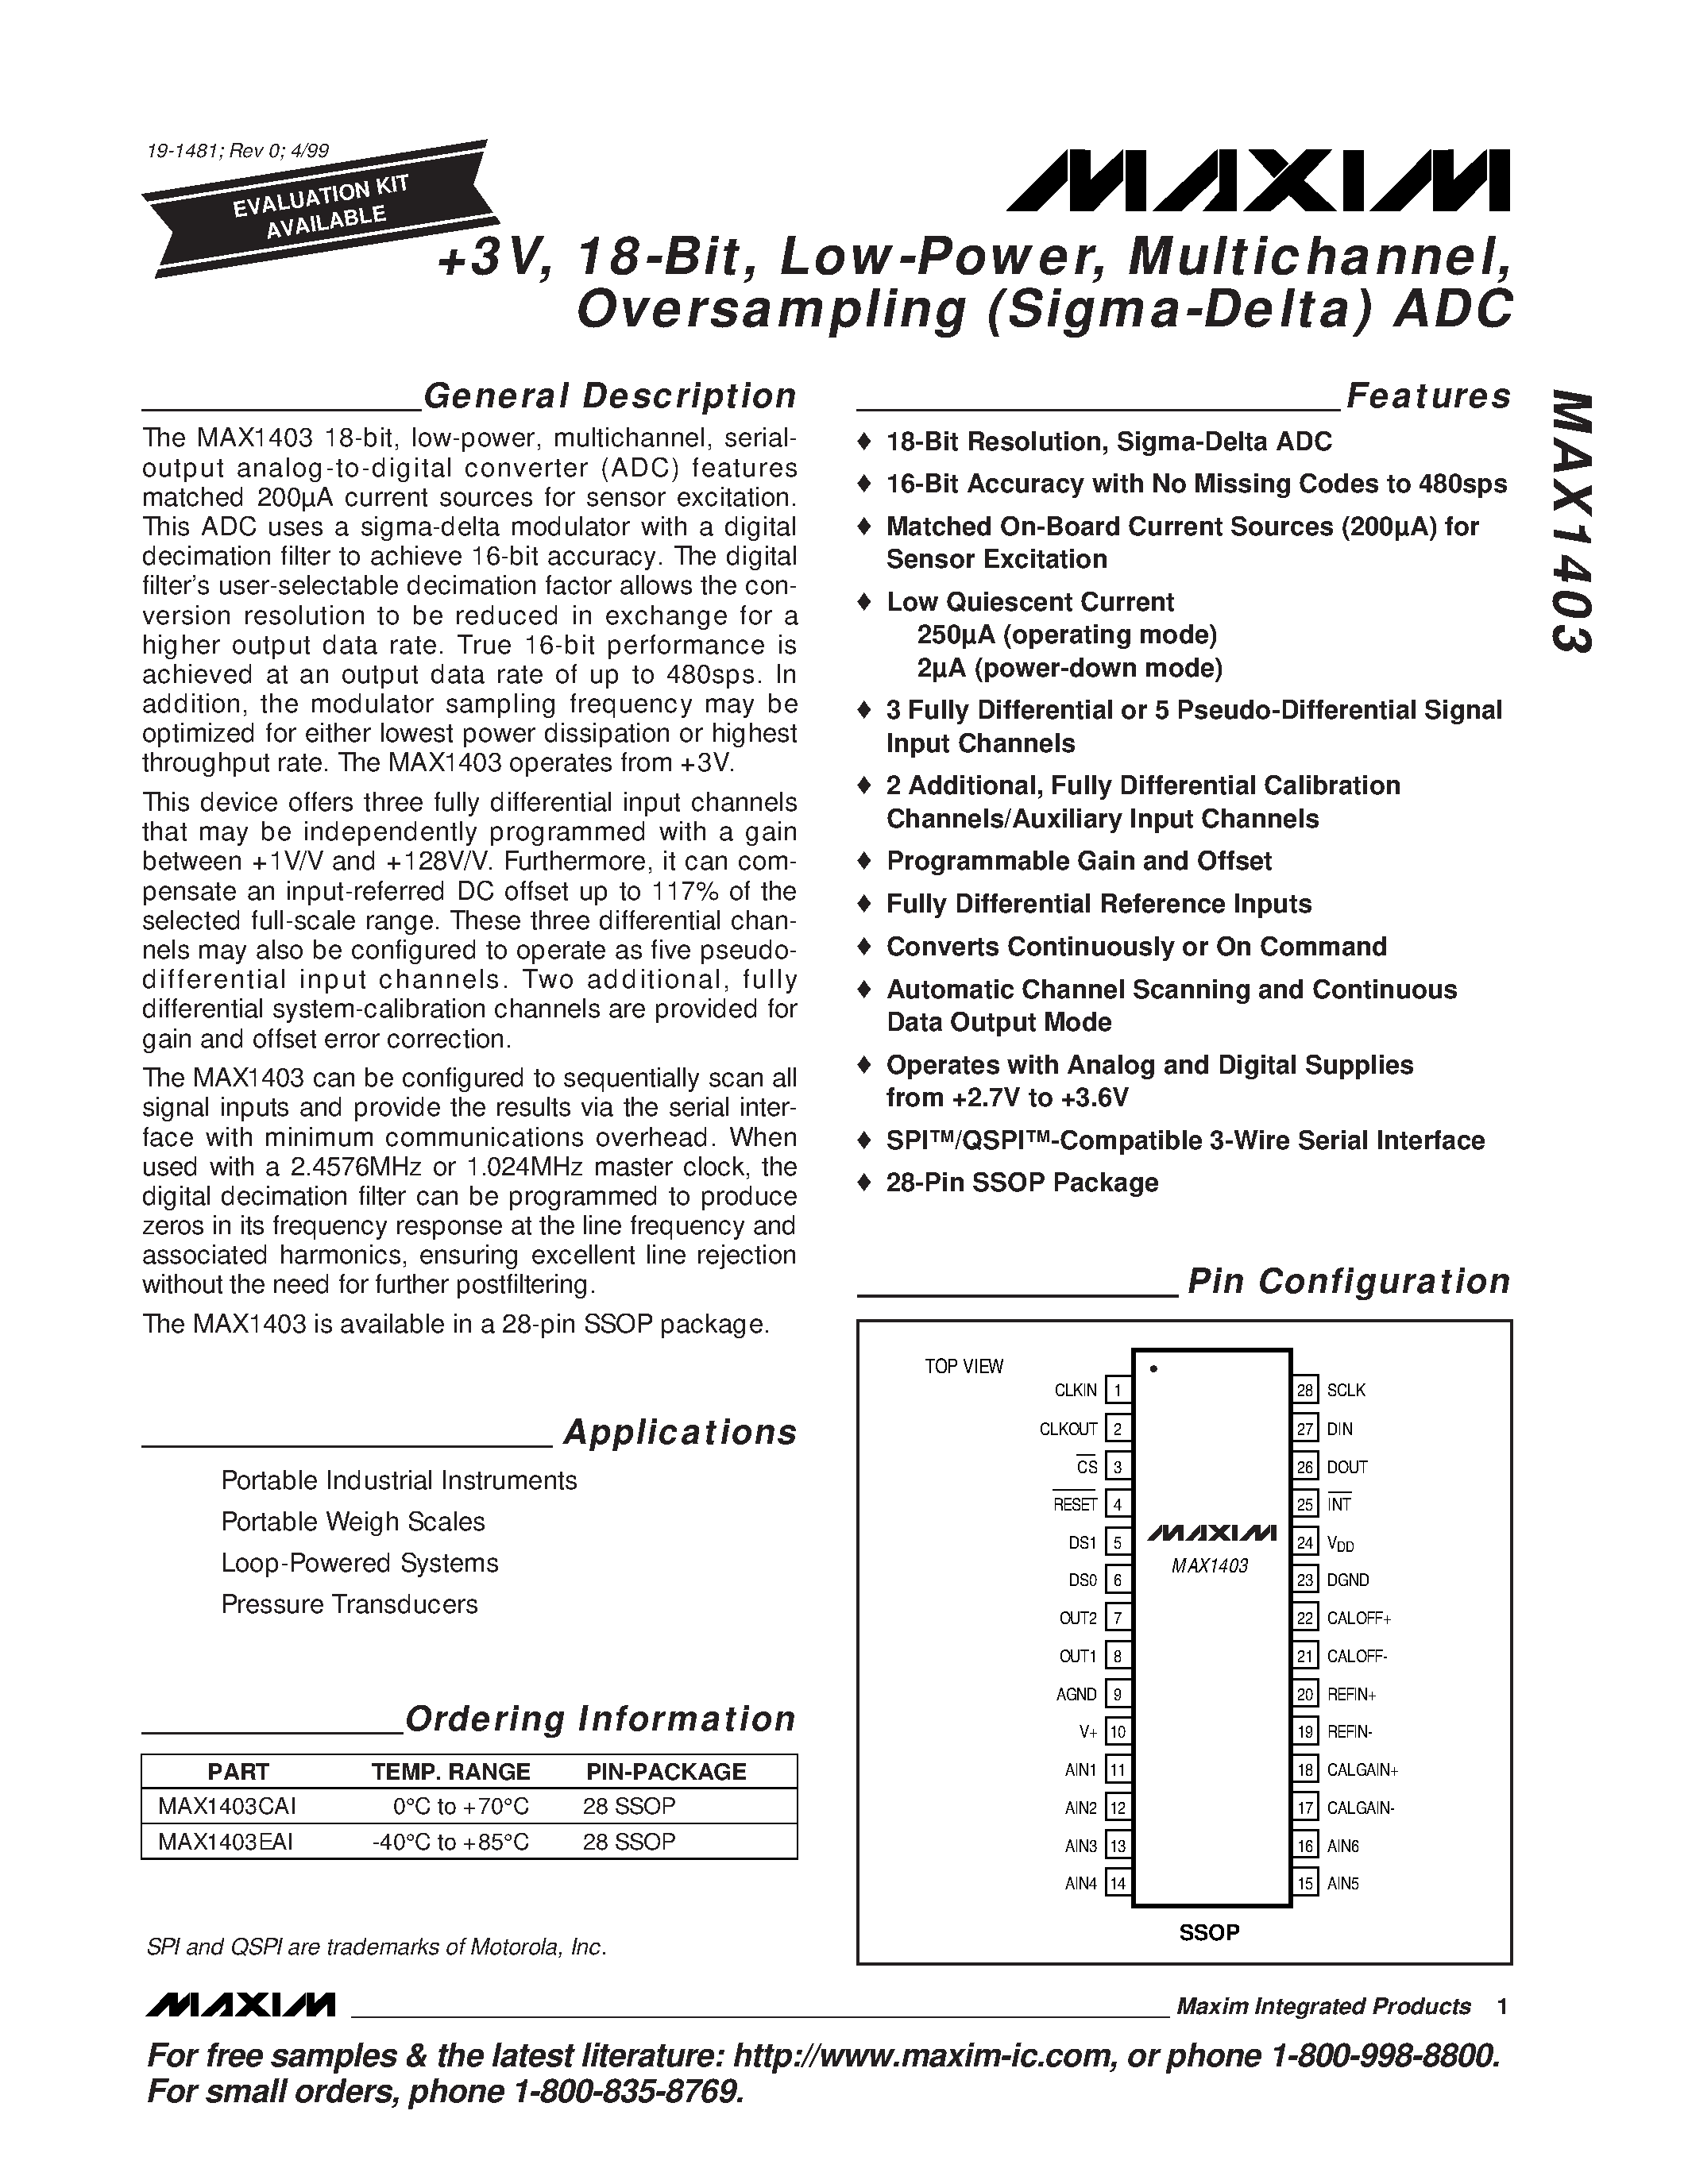 Даташит MAX1403CAI - +3V / 18-Bit / Low-Power / Multichannel / Oversampling Sigma-Delta ADC страница 1